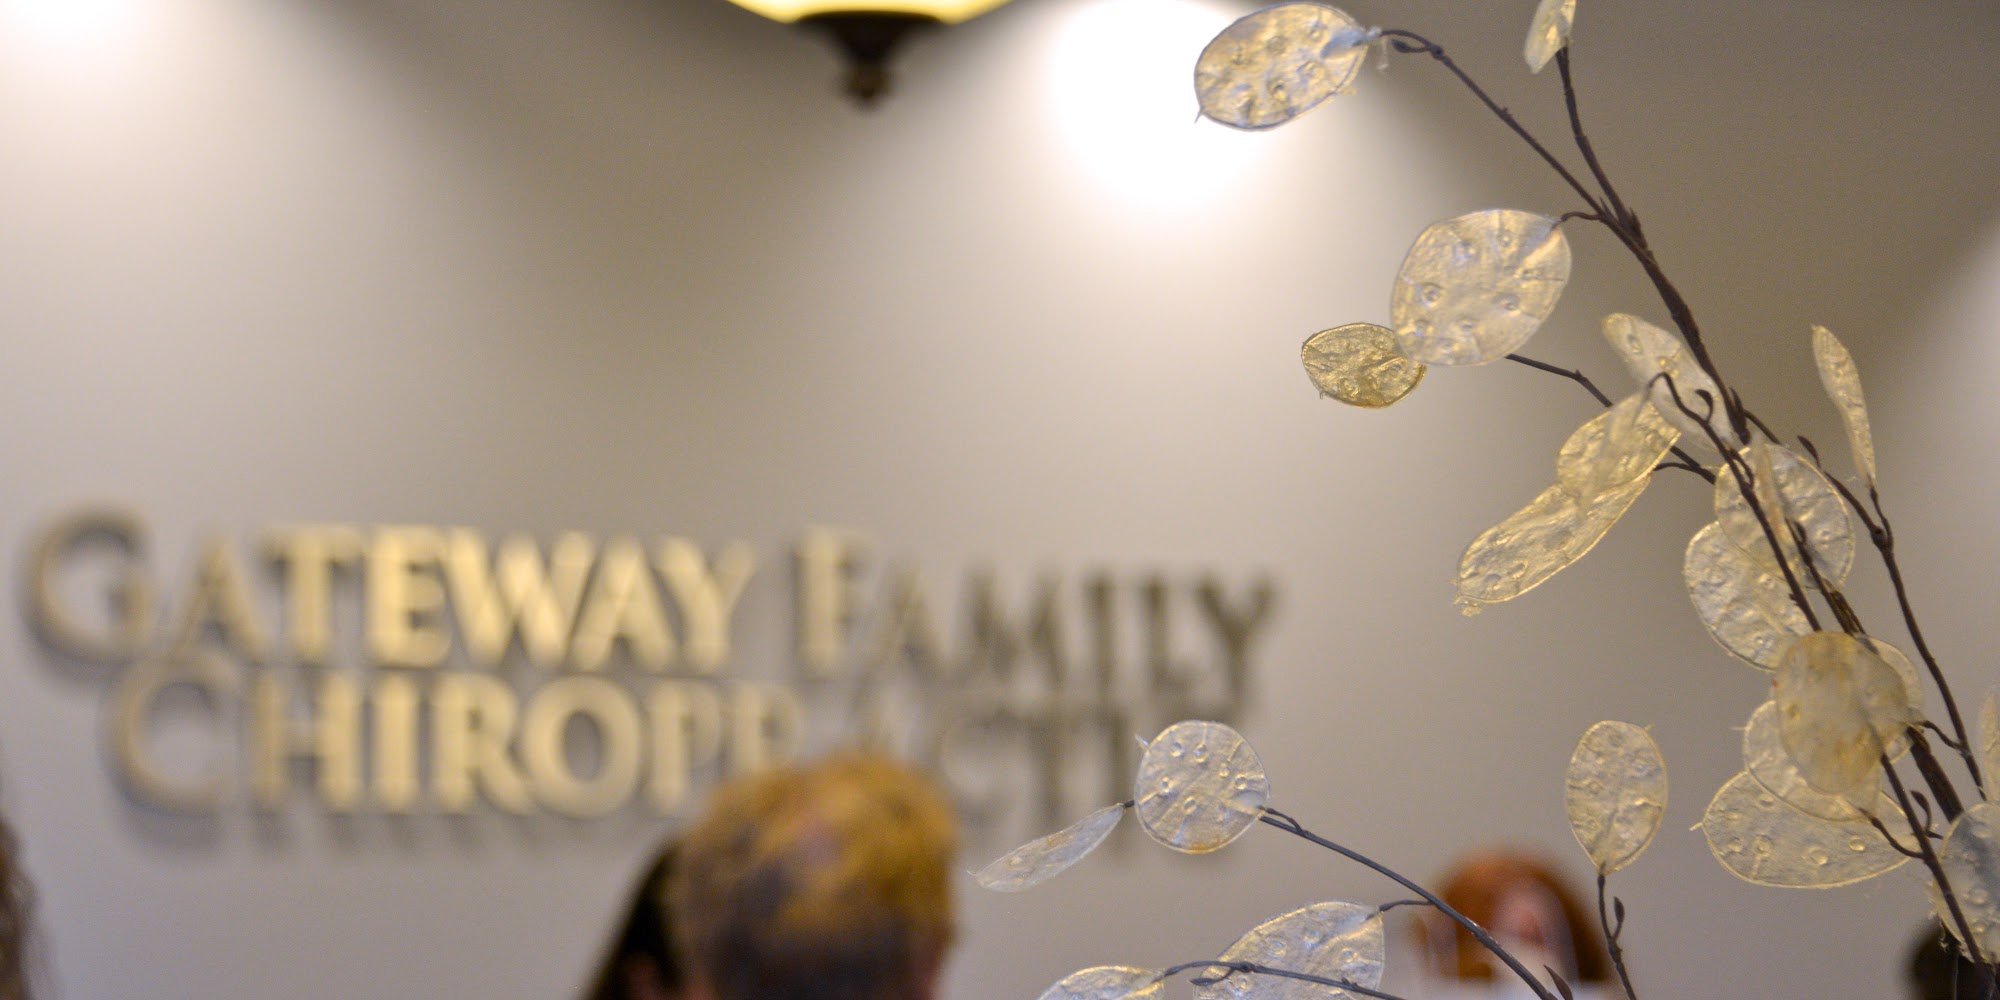 Gateway Family Chiropractic - Loveland